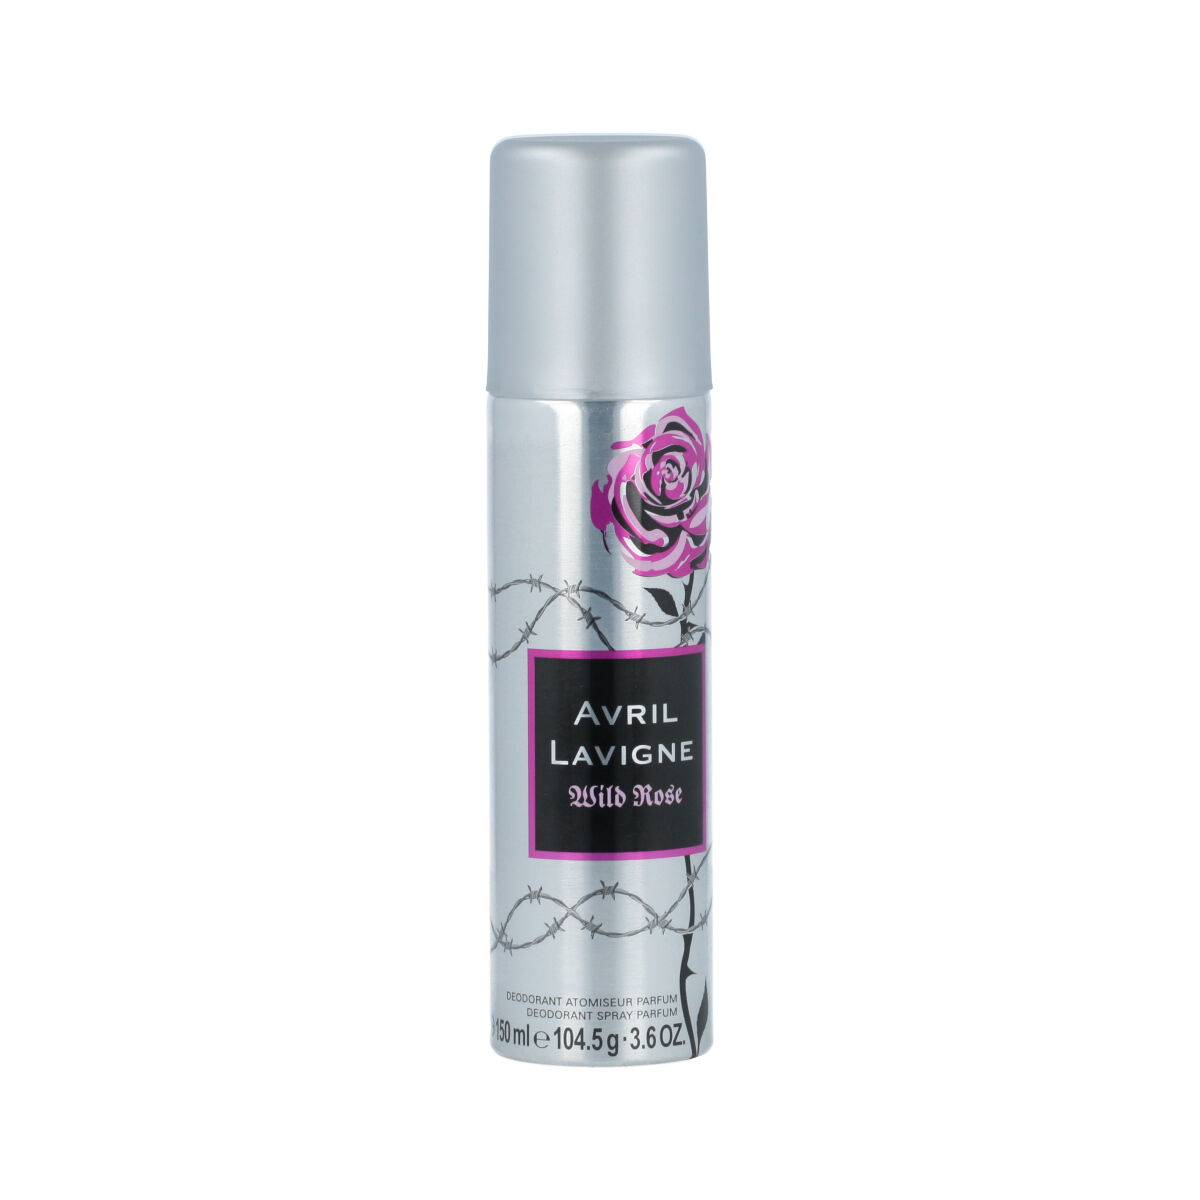 Deodorante Spray Avril Lavigne Wild Rose 150 ml